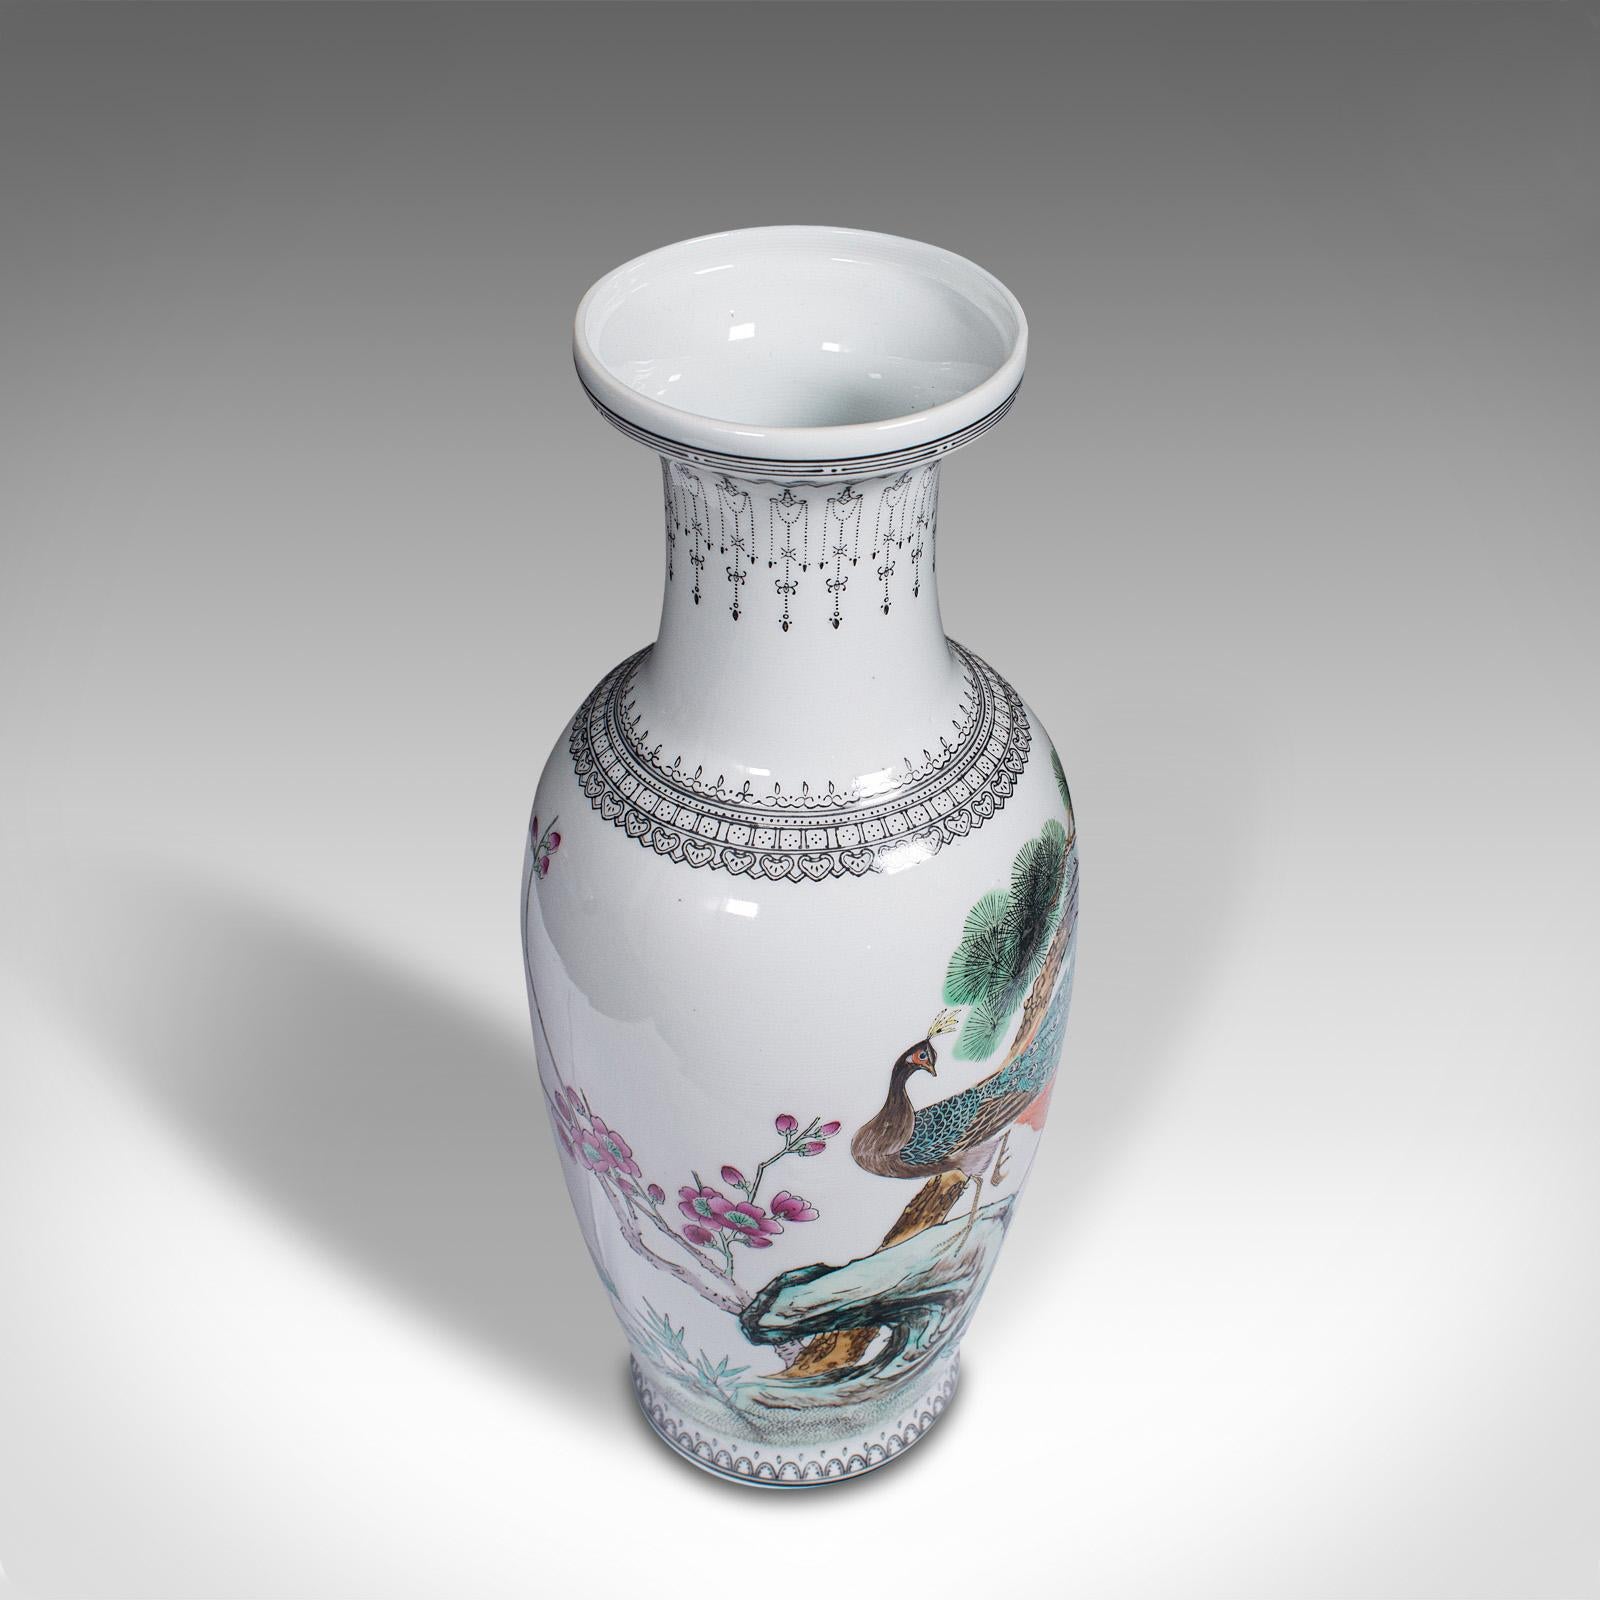 20th Century Vintage Flower Vase, Chinese, Ceramic, Decorative Urn, Peacock Motif, circa 1960 For Sale